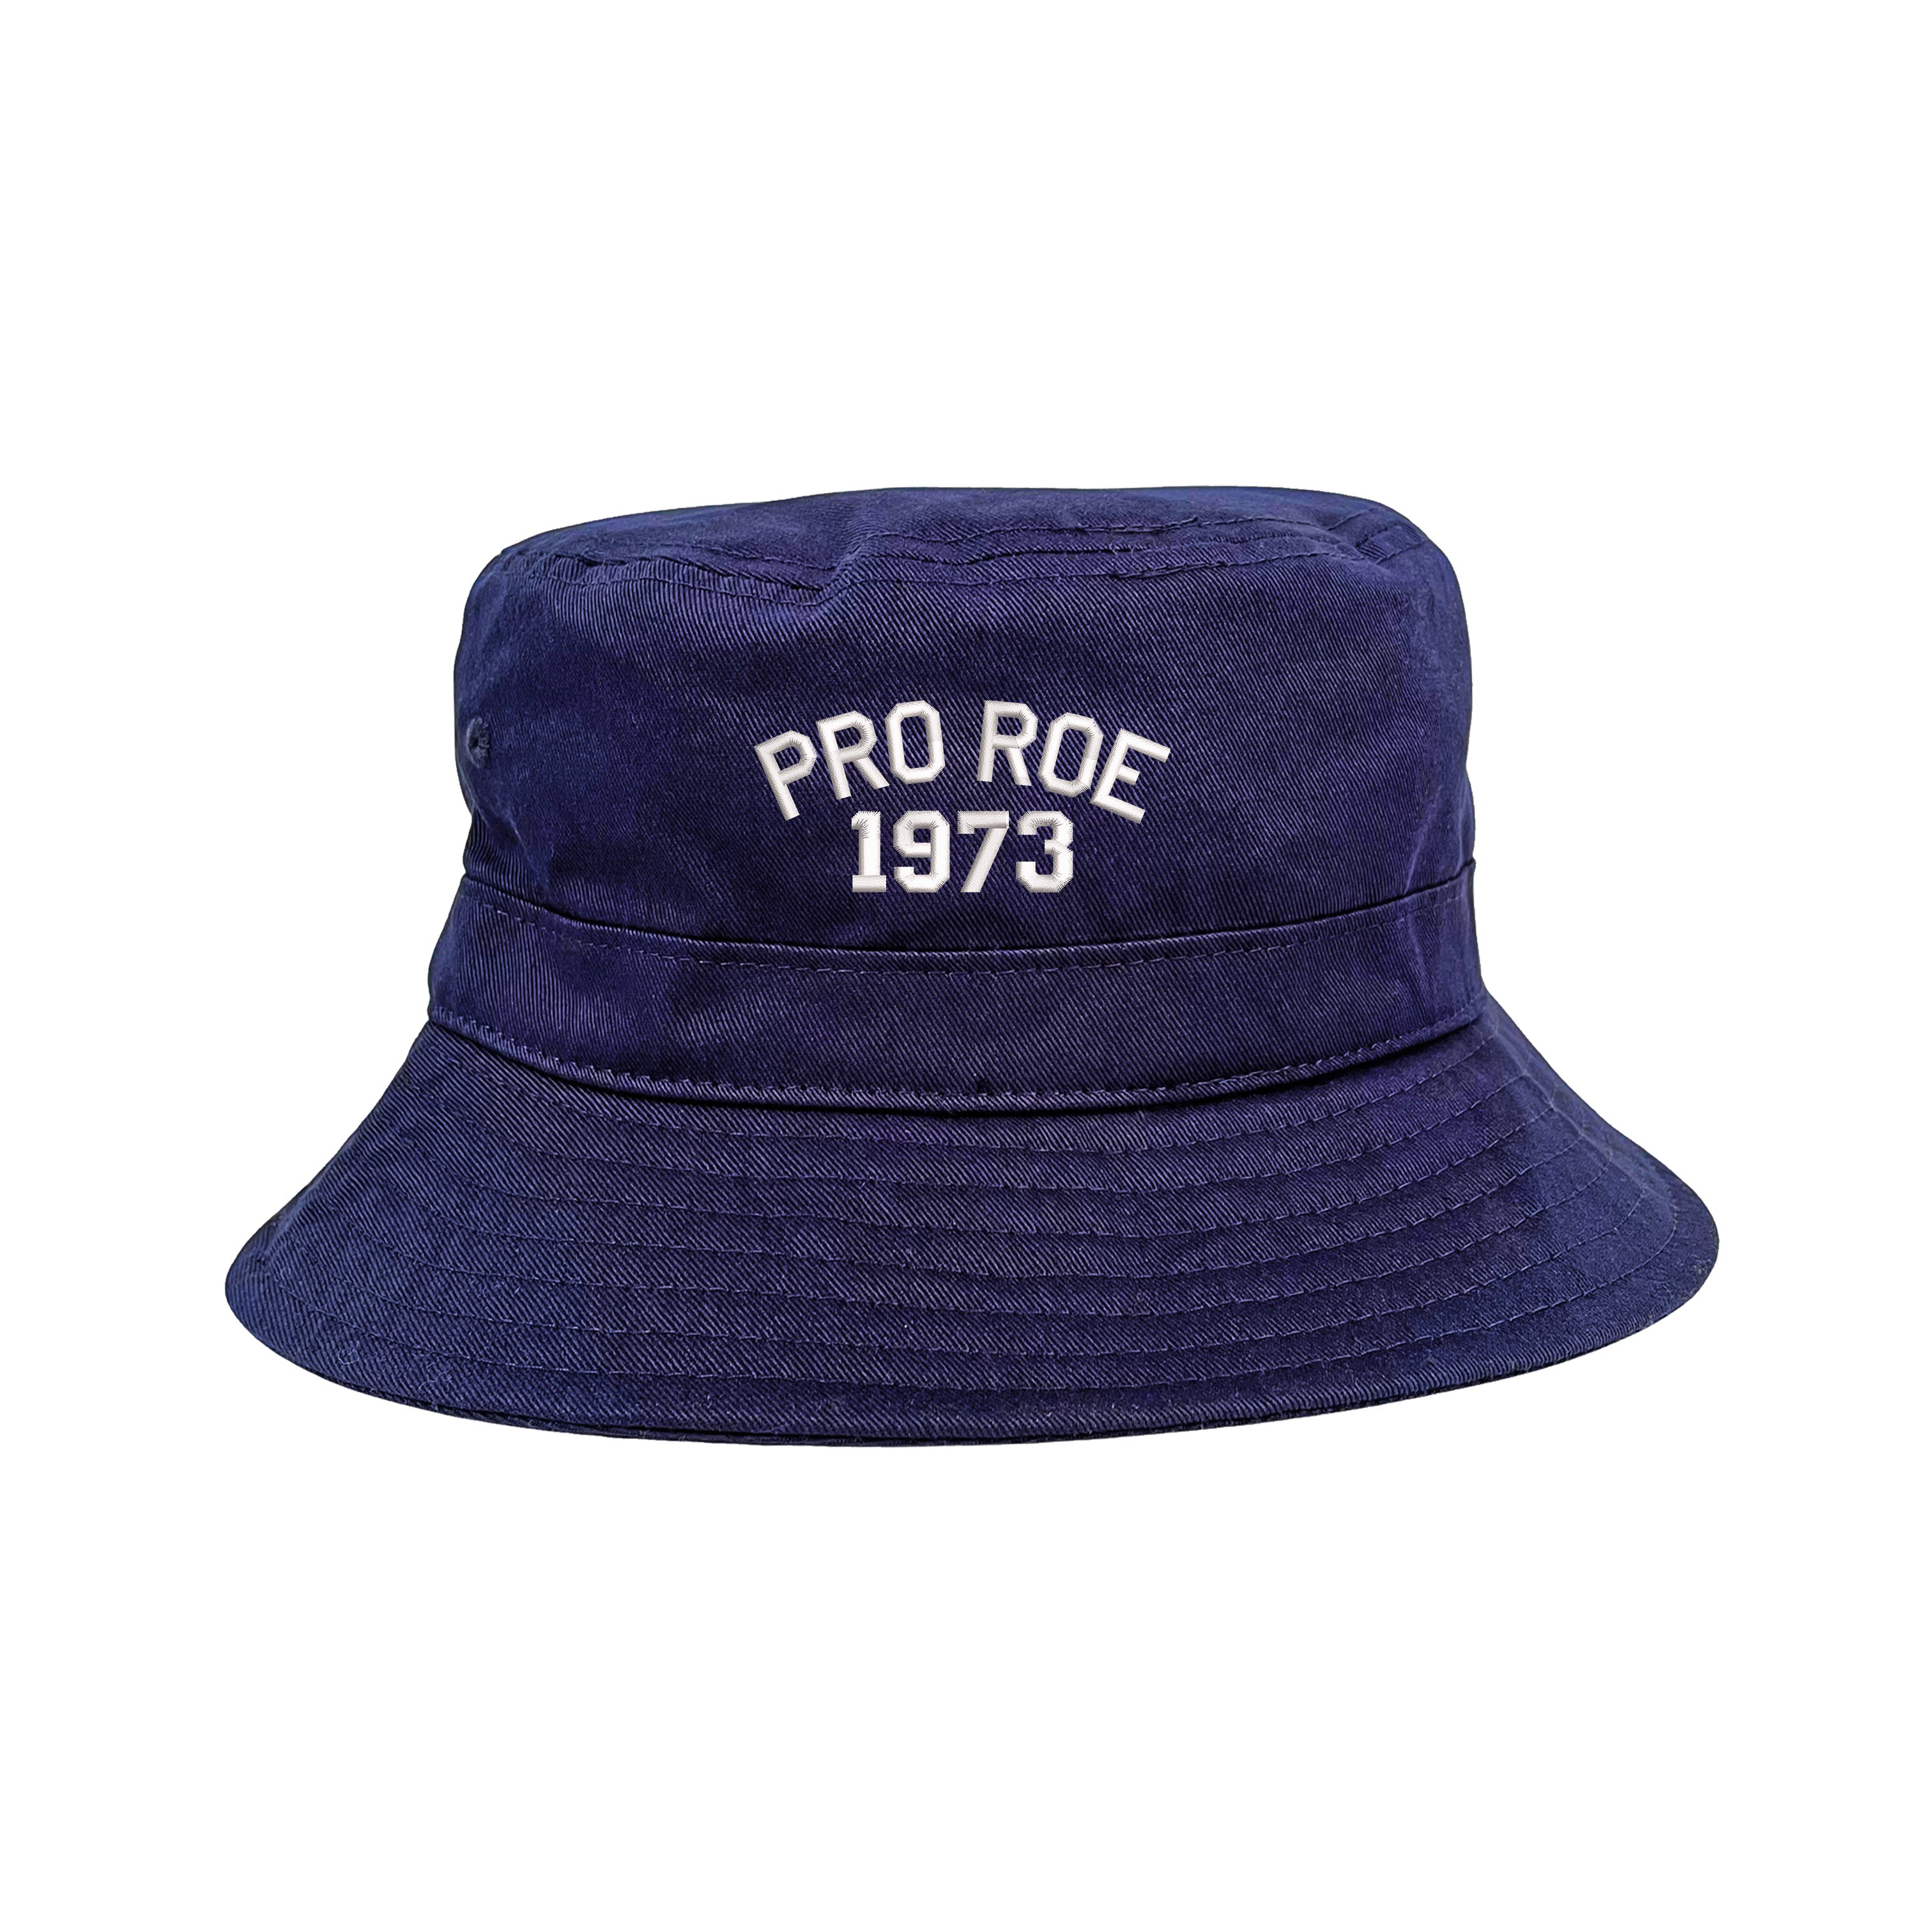 Pro Roe 1973 Navy Bucket Hat - DSY Lifestyle